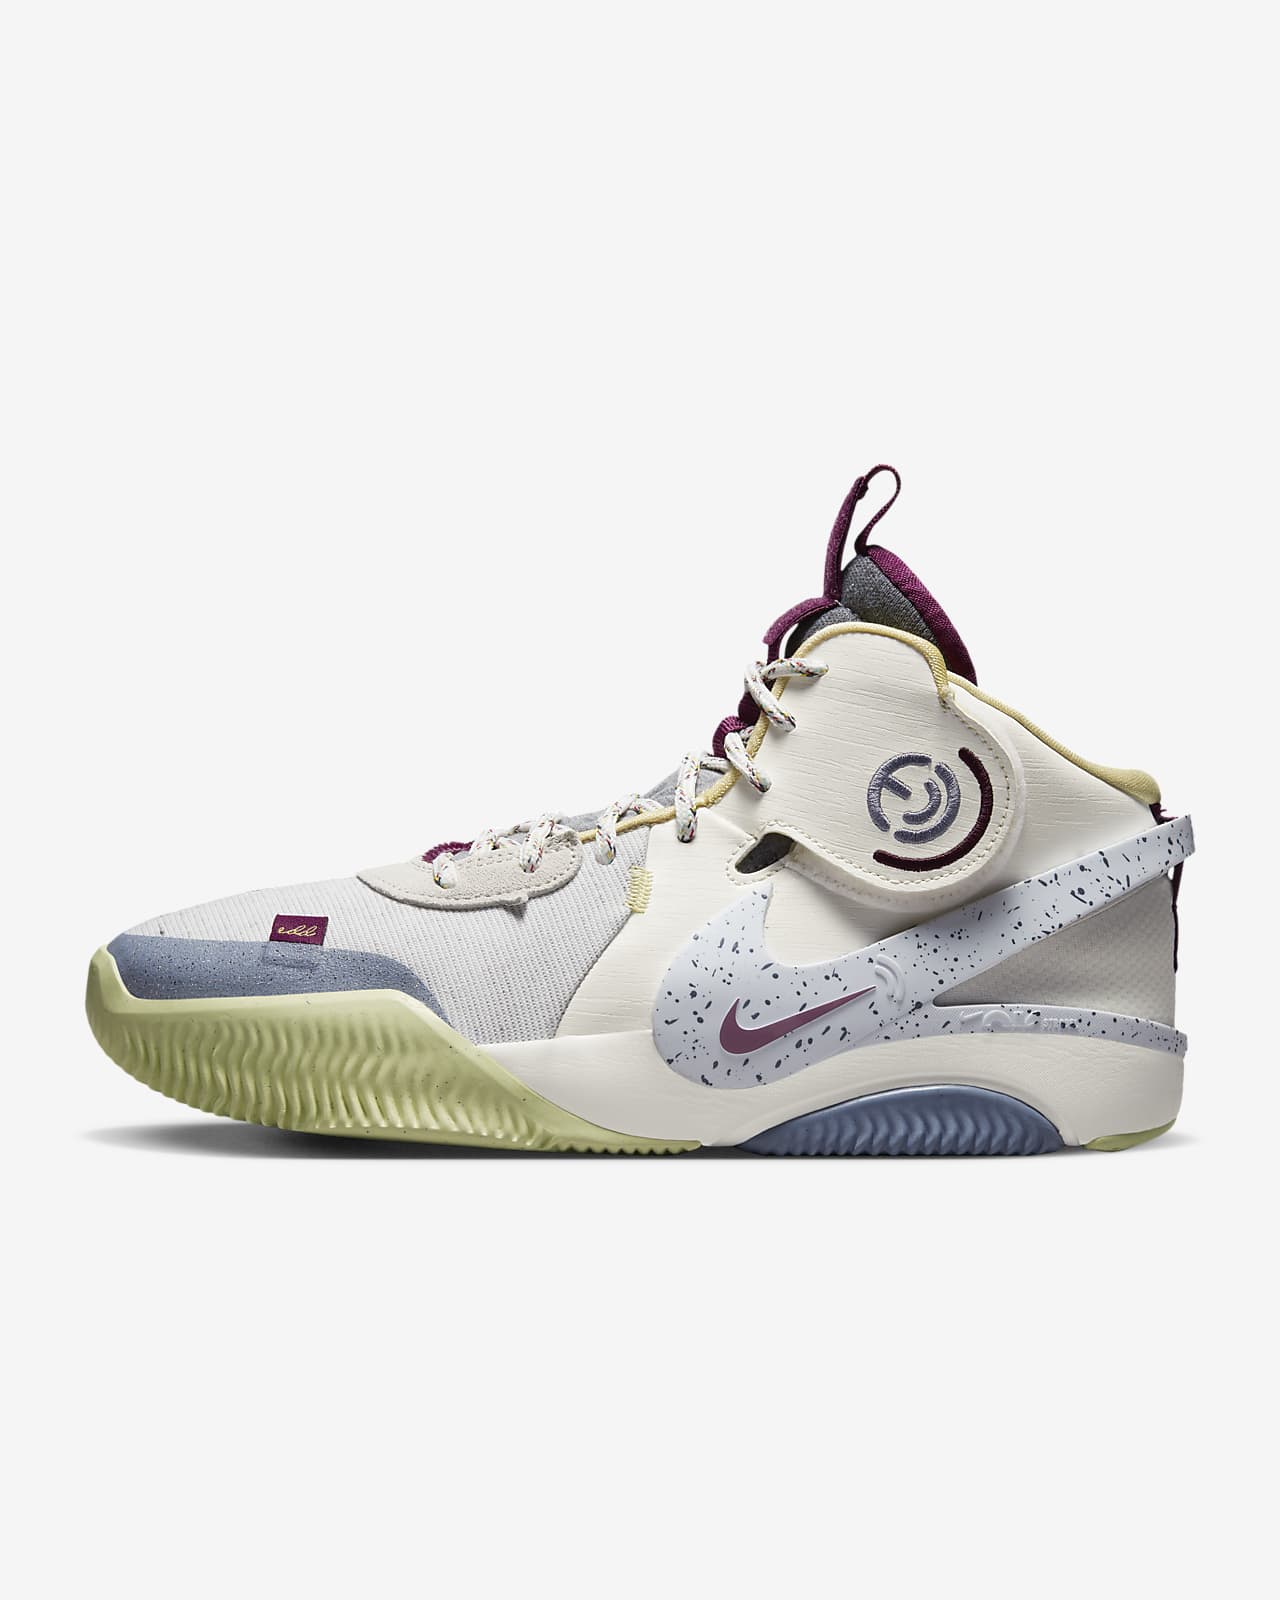 Nike Air Deldon 'Deldon Designs' Basketball Shoes